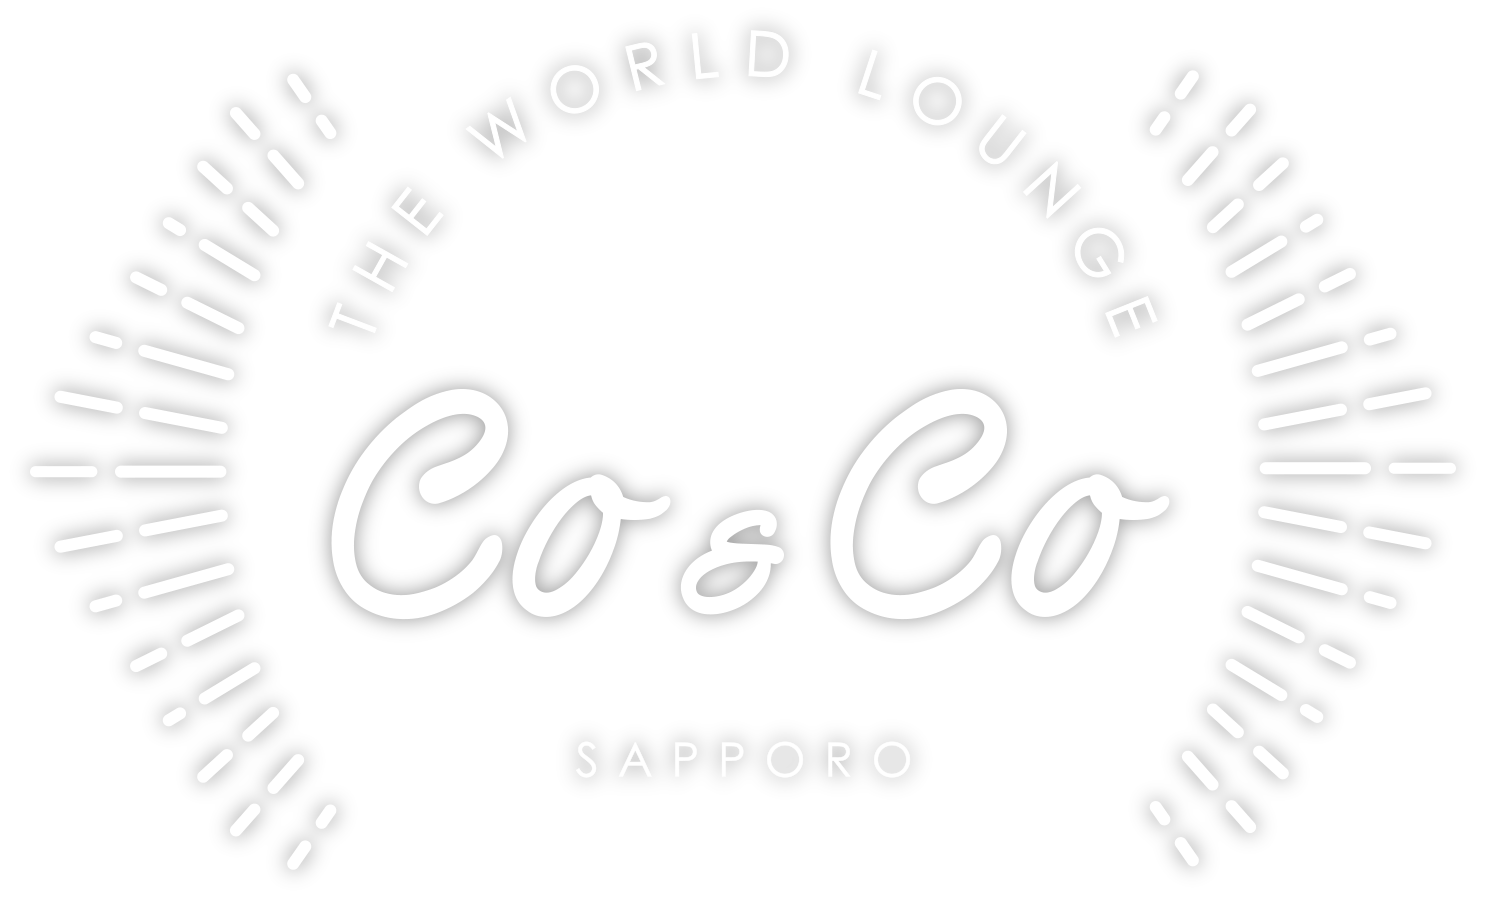 The World Lounge Co&Co Sapporo | ザ・ワールドラウンジ Co&Co 札幌